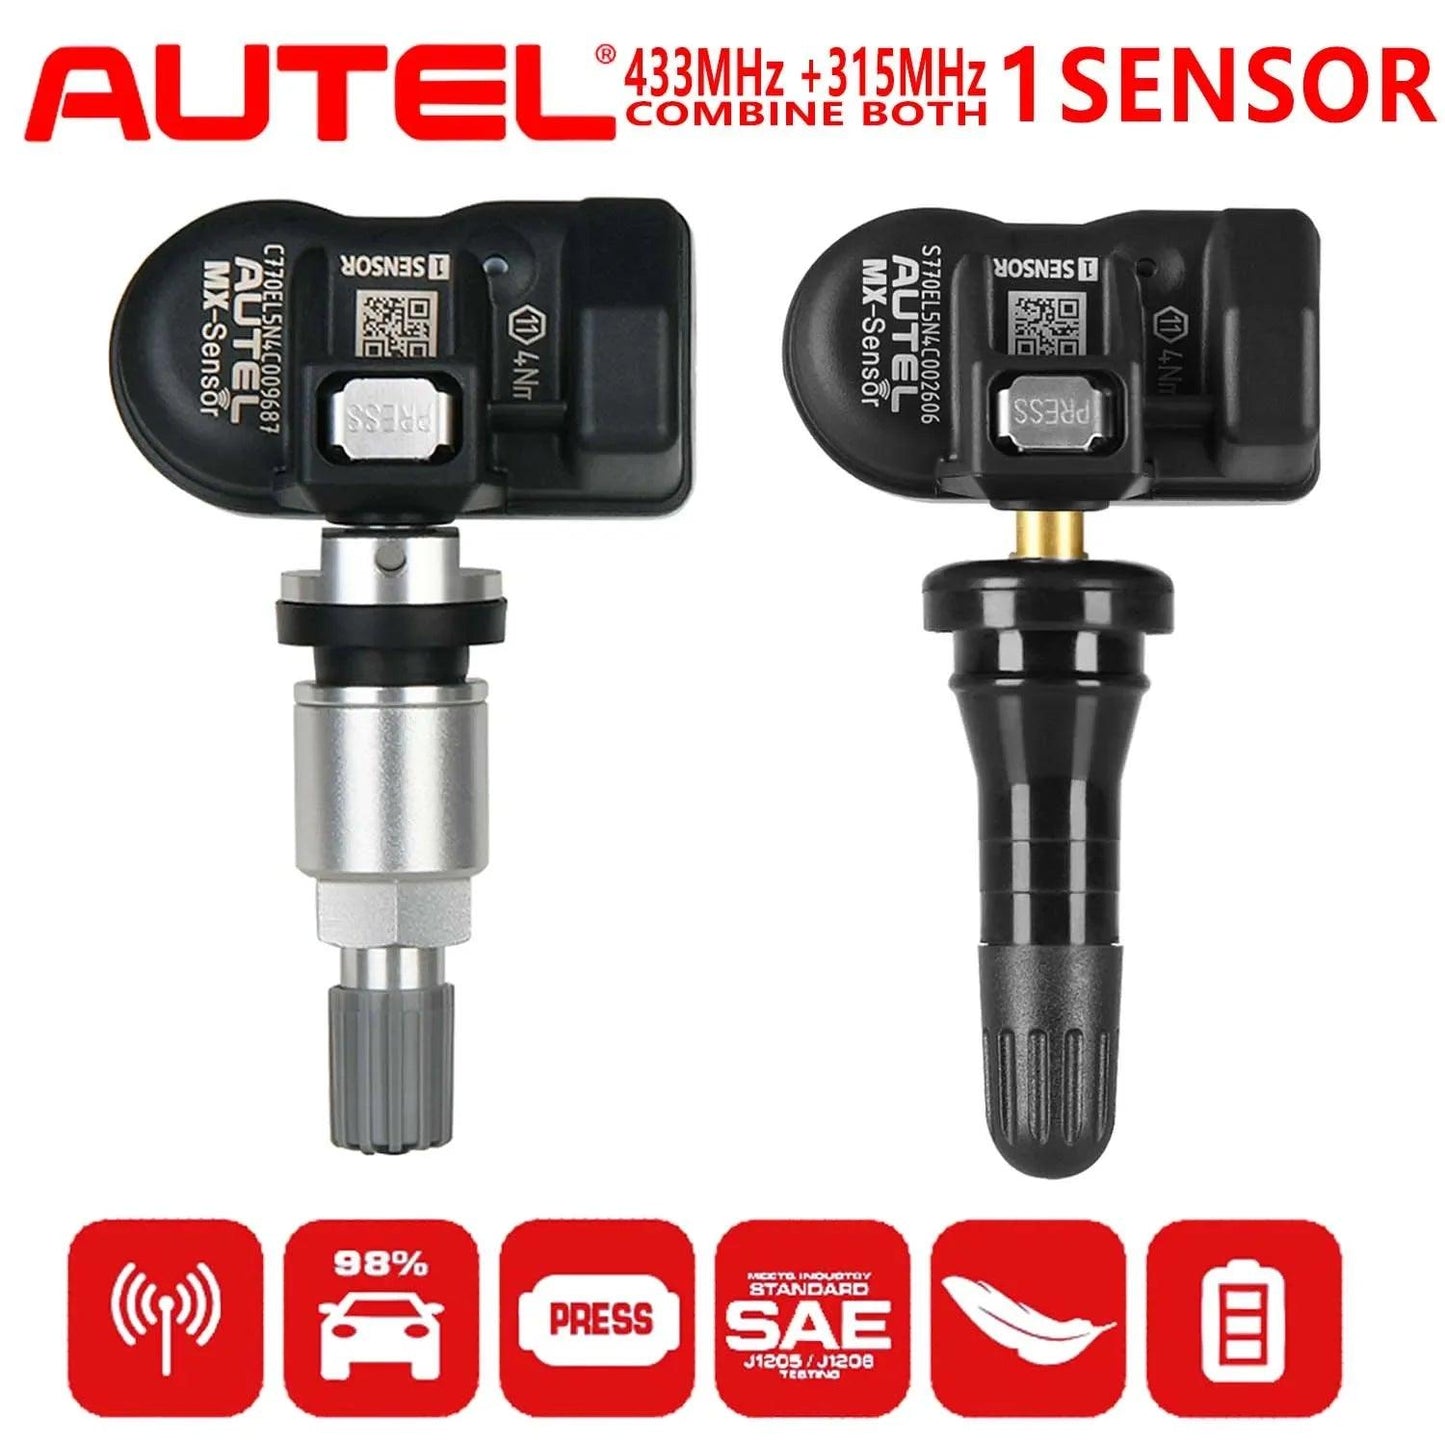 Autel 2in1 MX-Sensors TPMS Car Tire Sensor 433MHZ 315MHZ Clone-able Programming Sensors Work with TS501 TS508 Russian in Stock - Dynamex